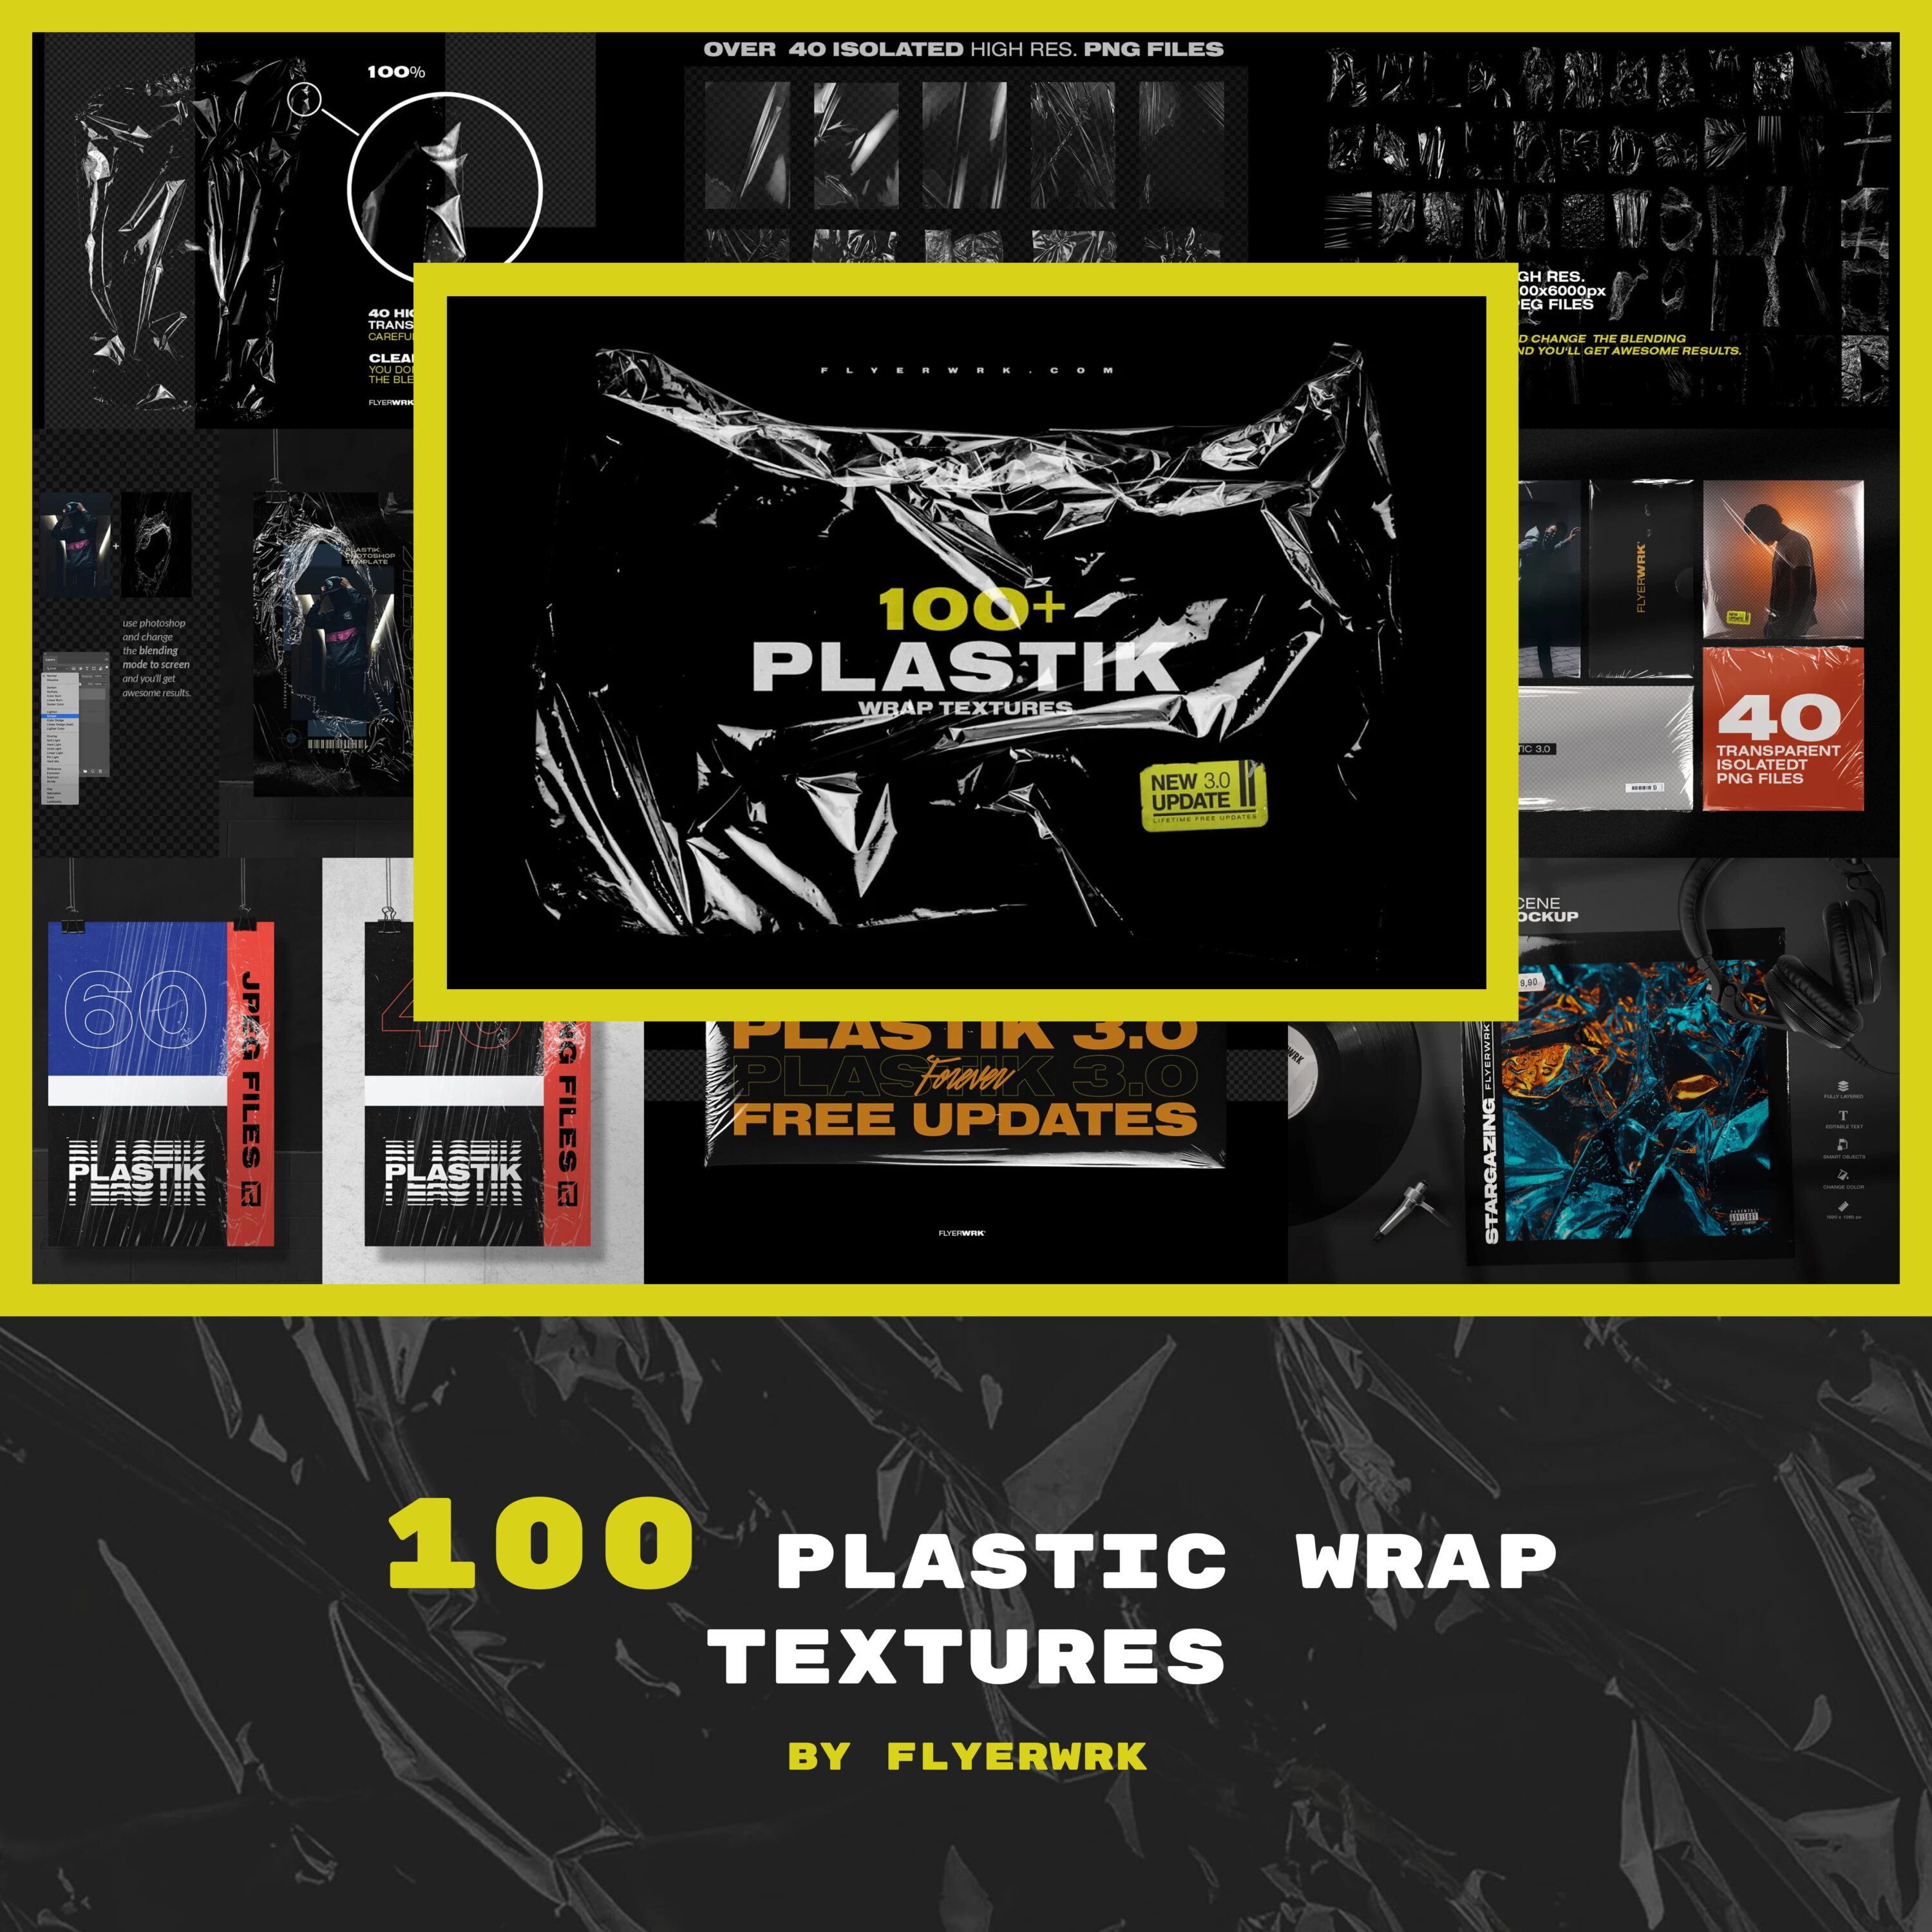 100 Plastic Wrap Textures cover image.